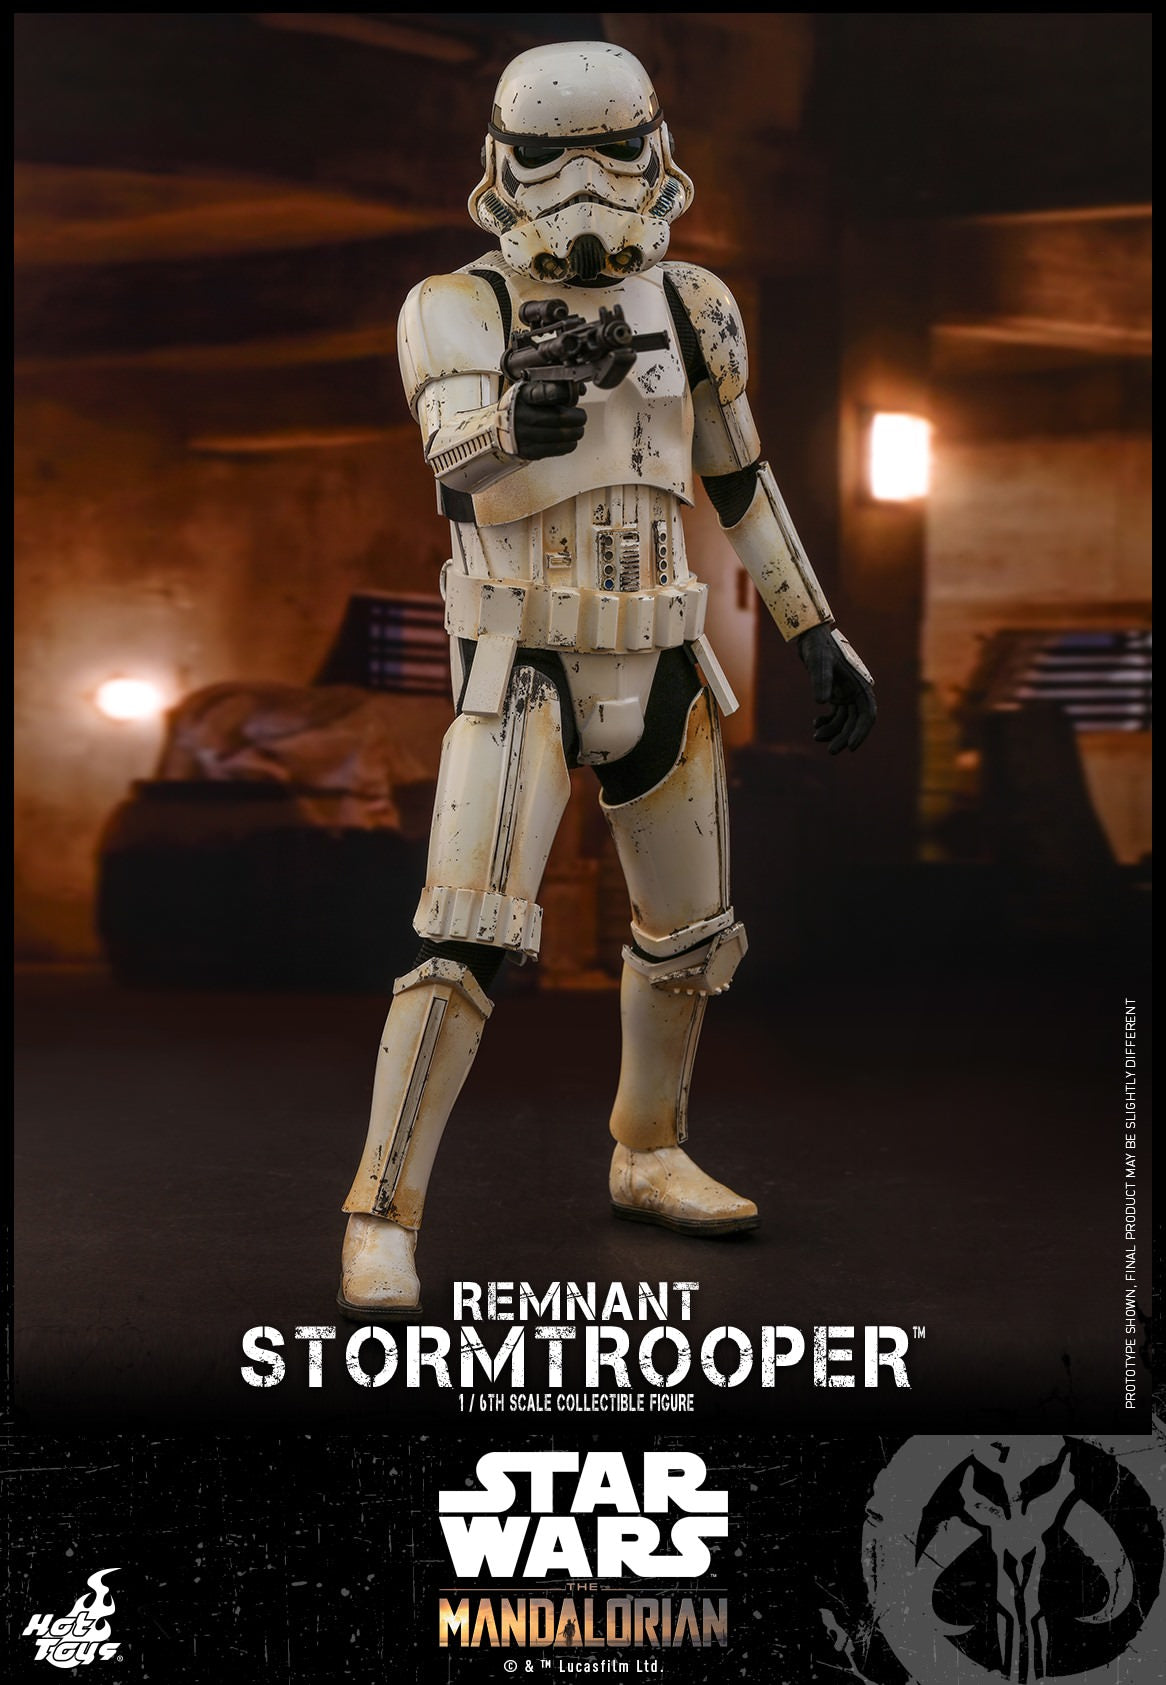 Remnant Stormtrooper 1/6 - The Mandalorian Hot Toys